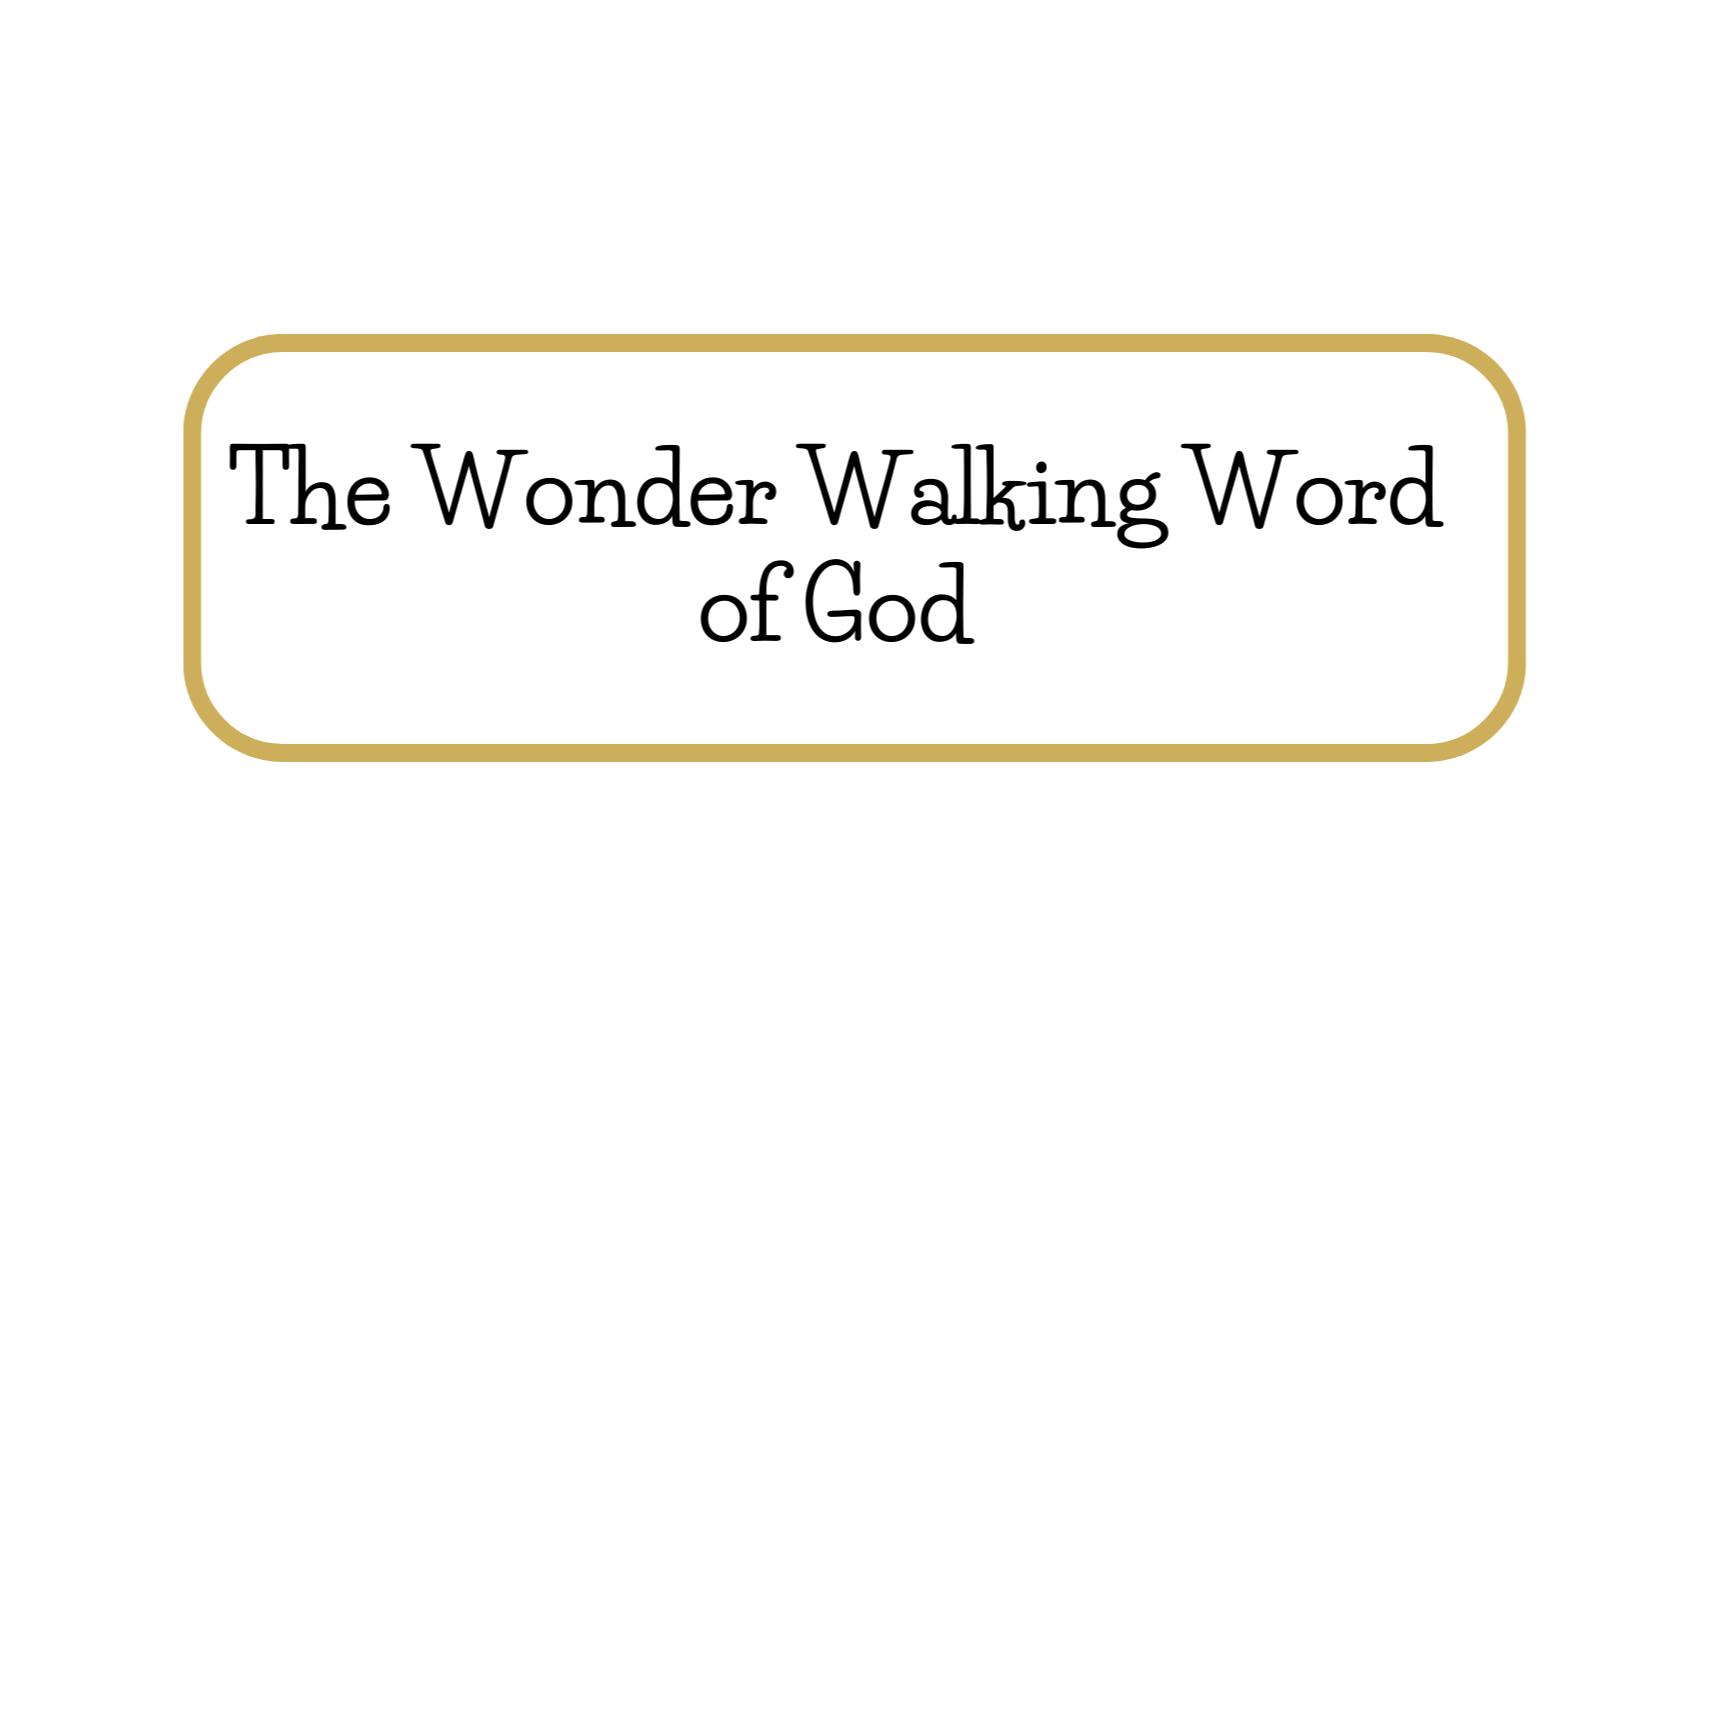 The Wonder Walking Word of God.